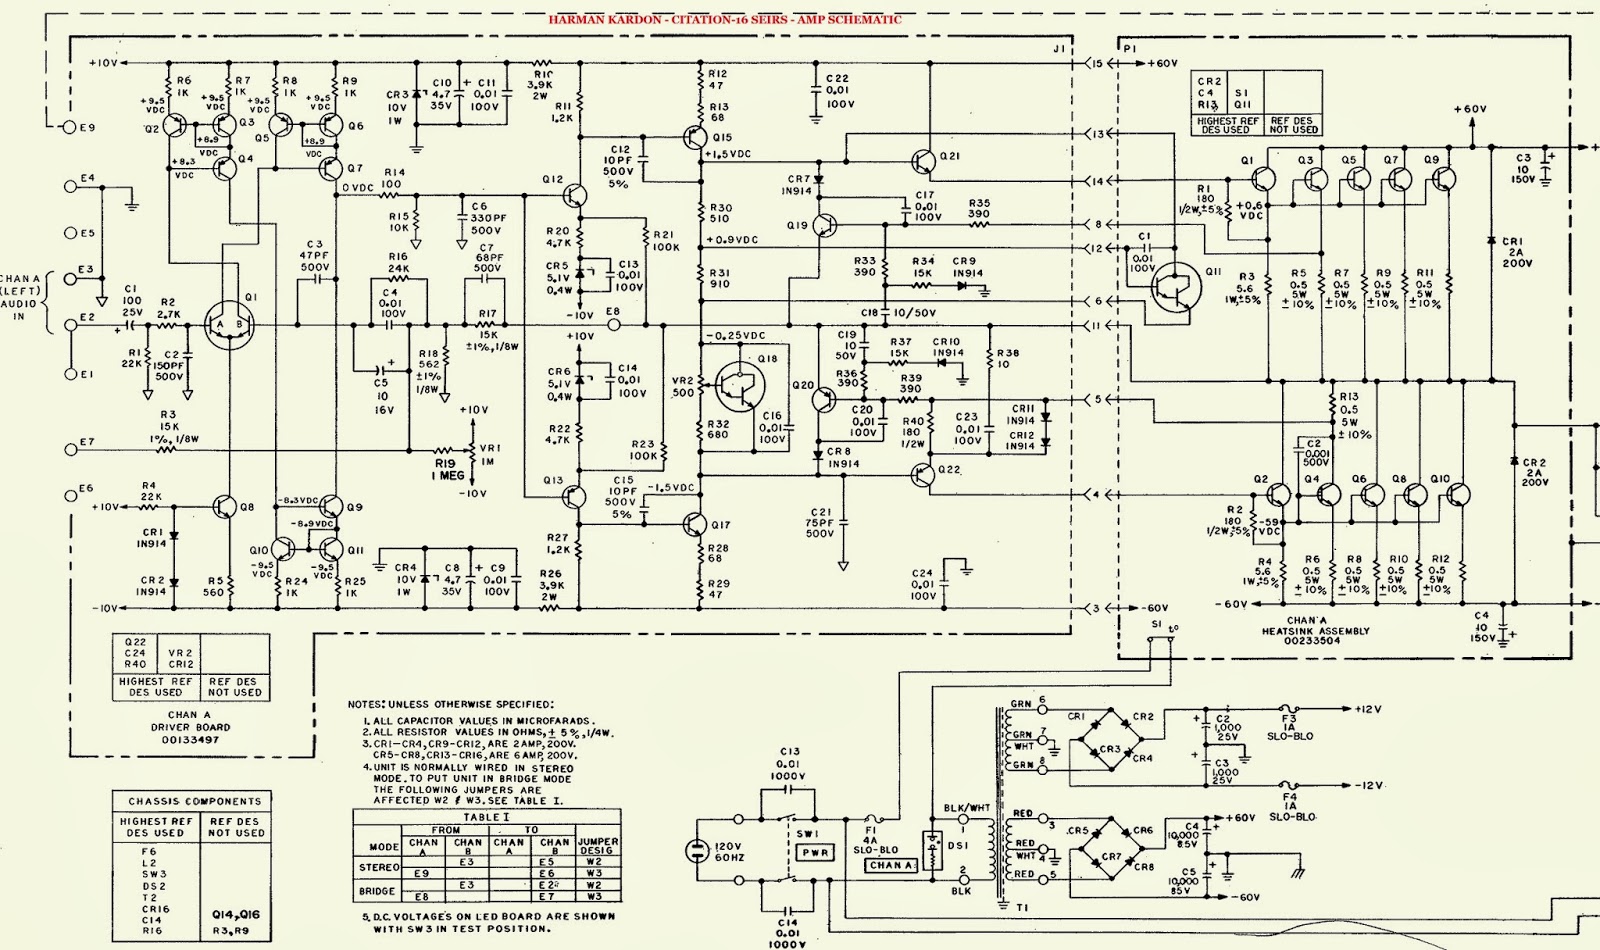 mini cooper harman kardon amplifier wiring diagram